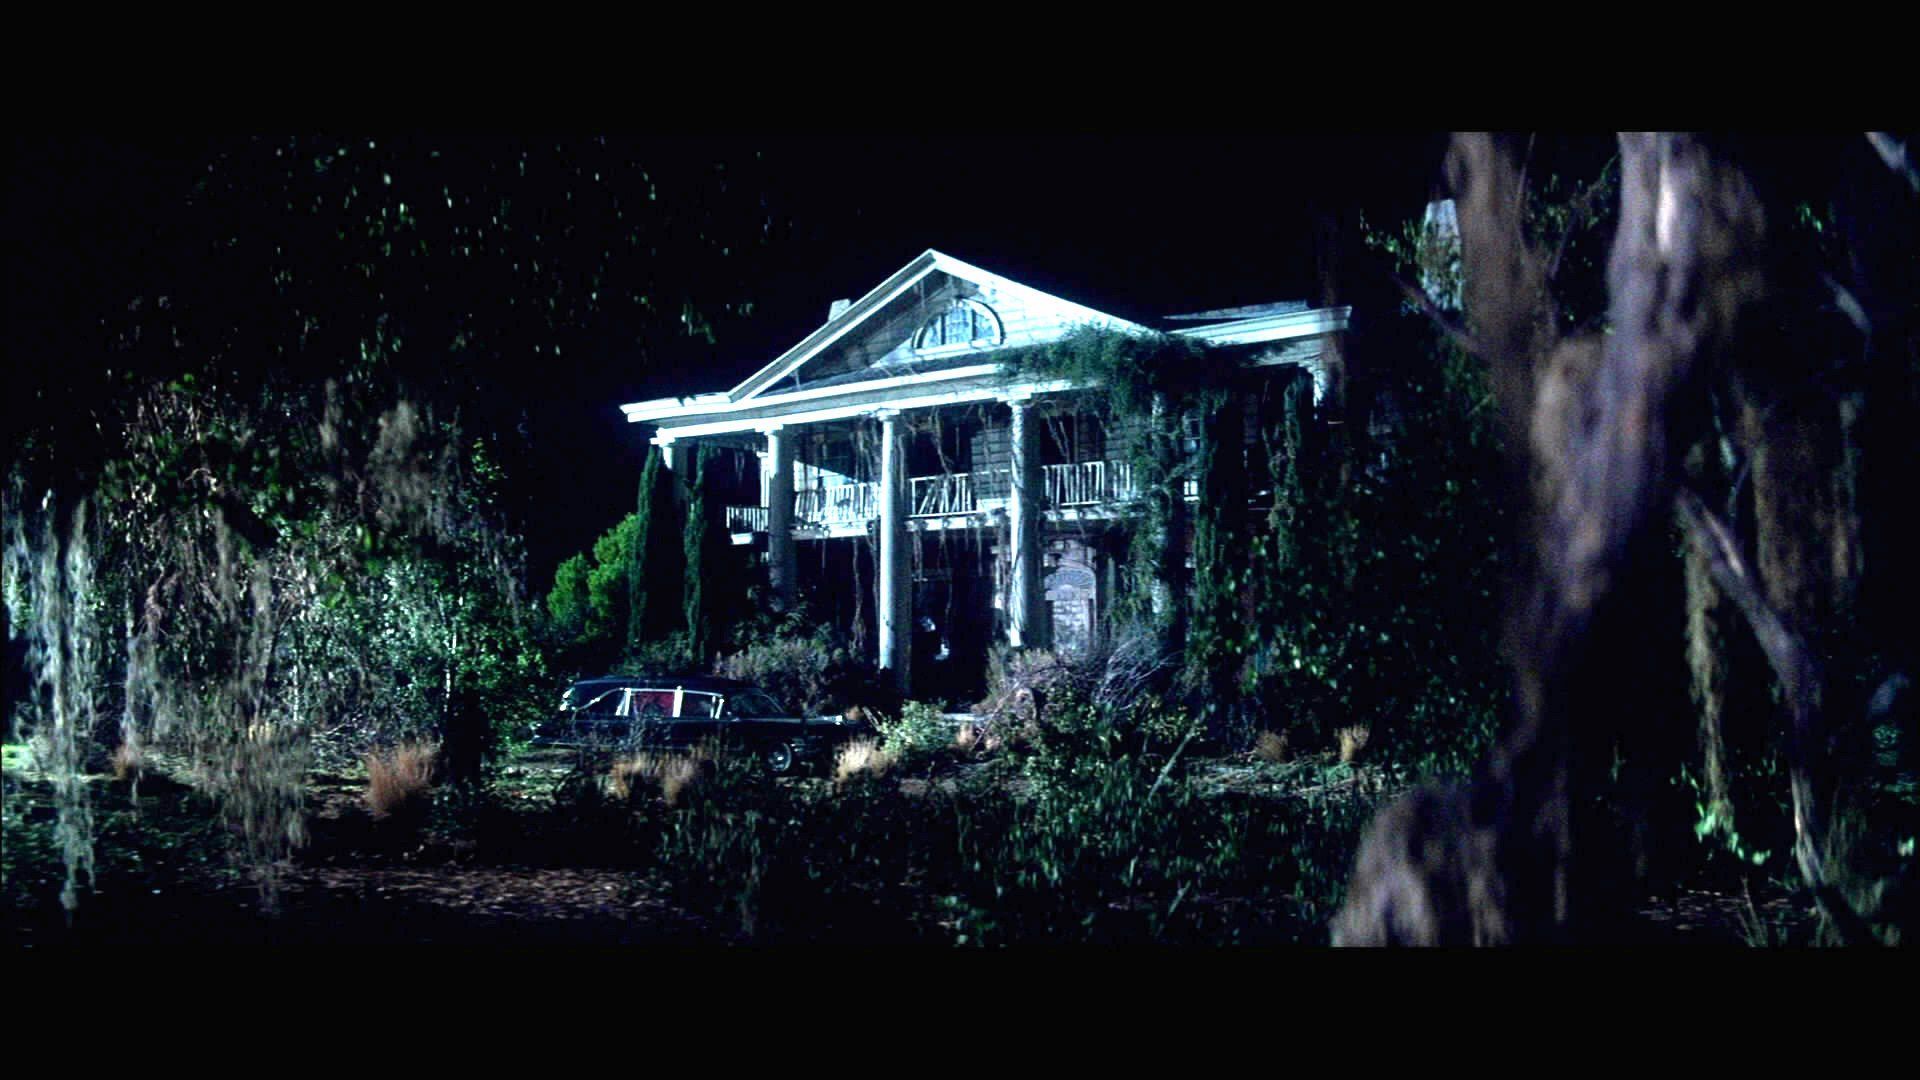 MONSTER SQUAD action comedy fantasy horror dark haunted halloween house hearse wallpaperx1080